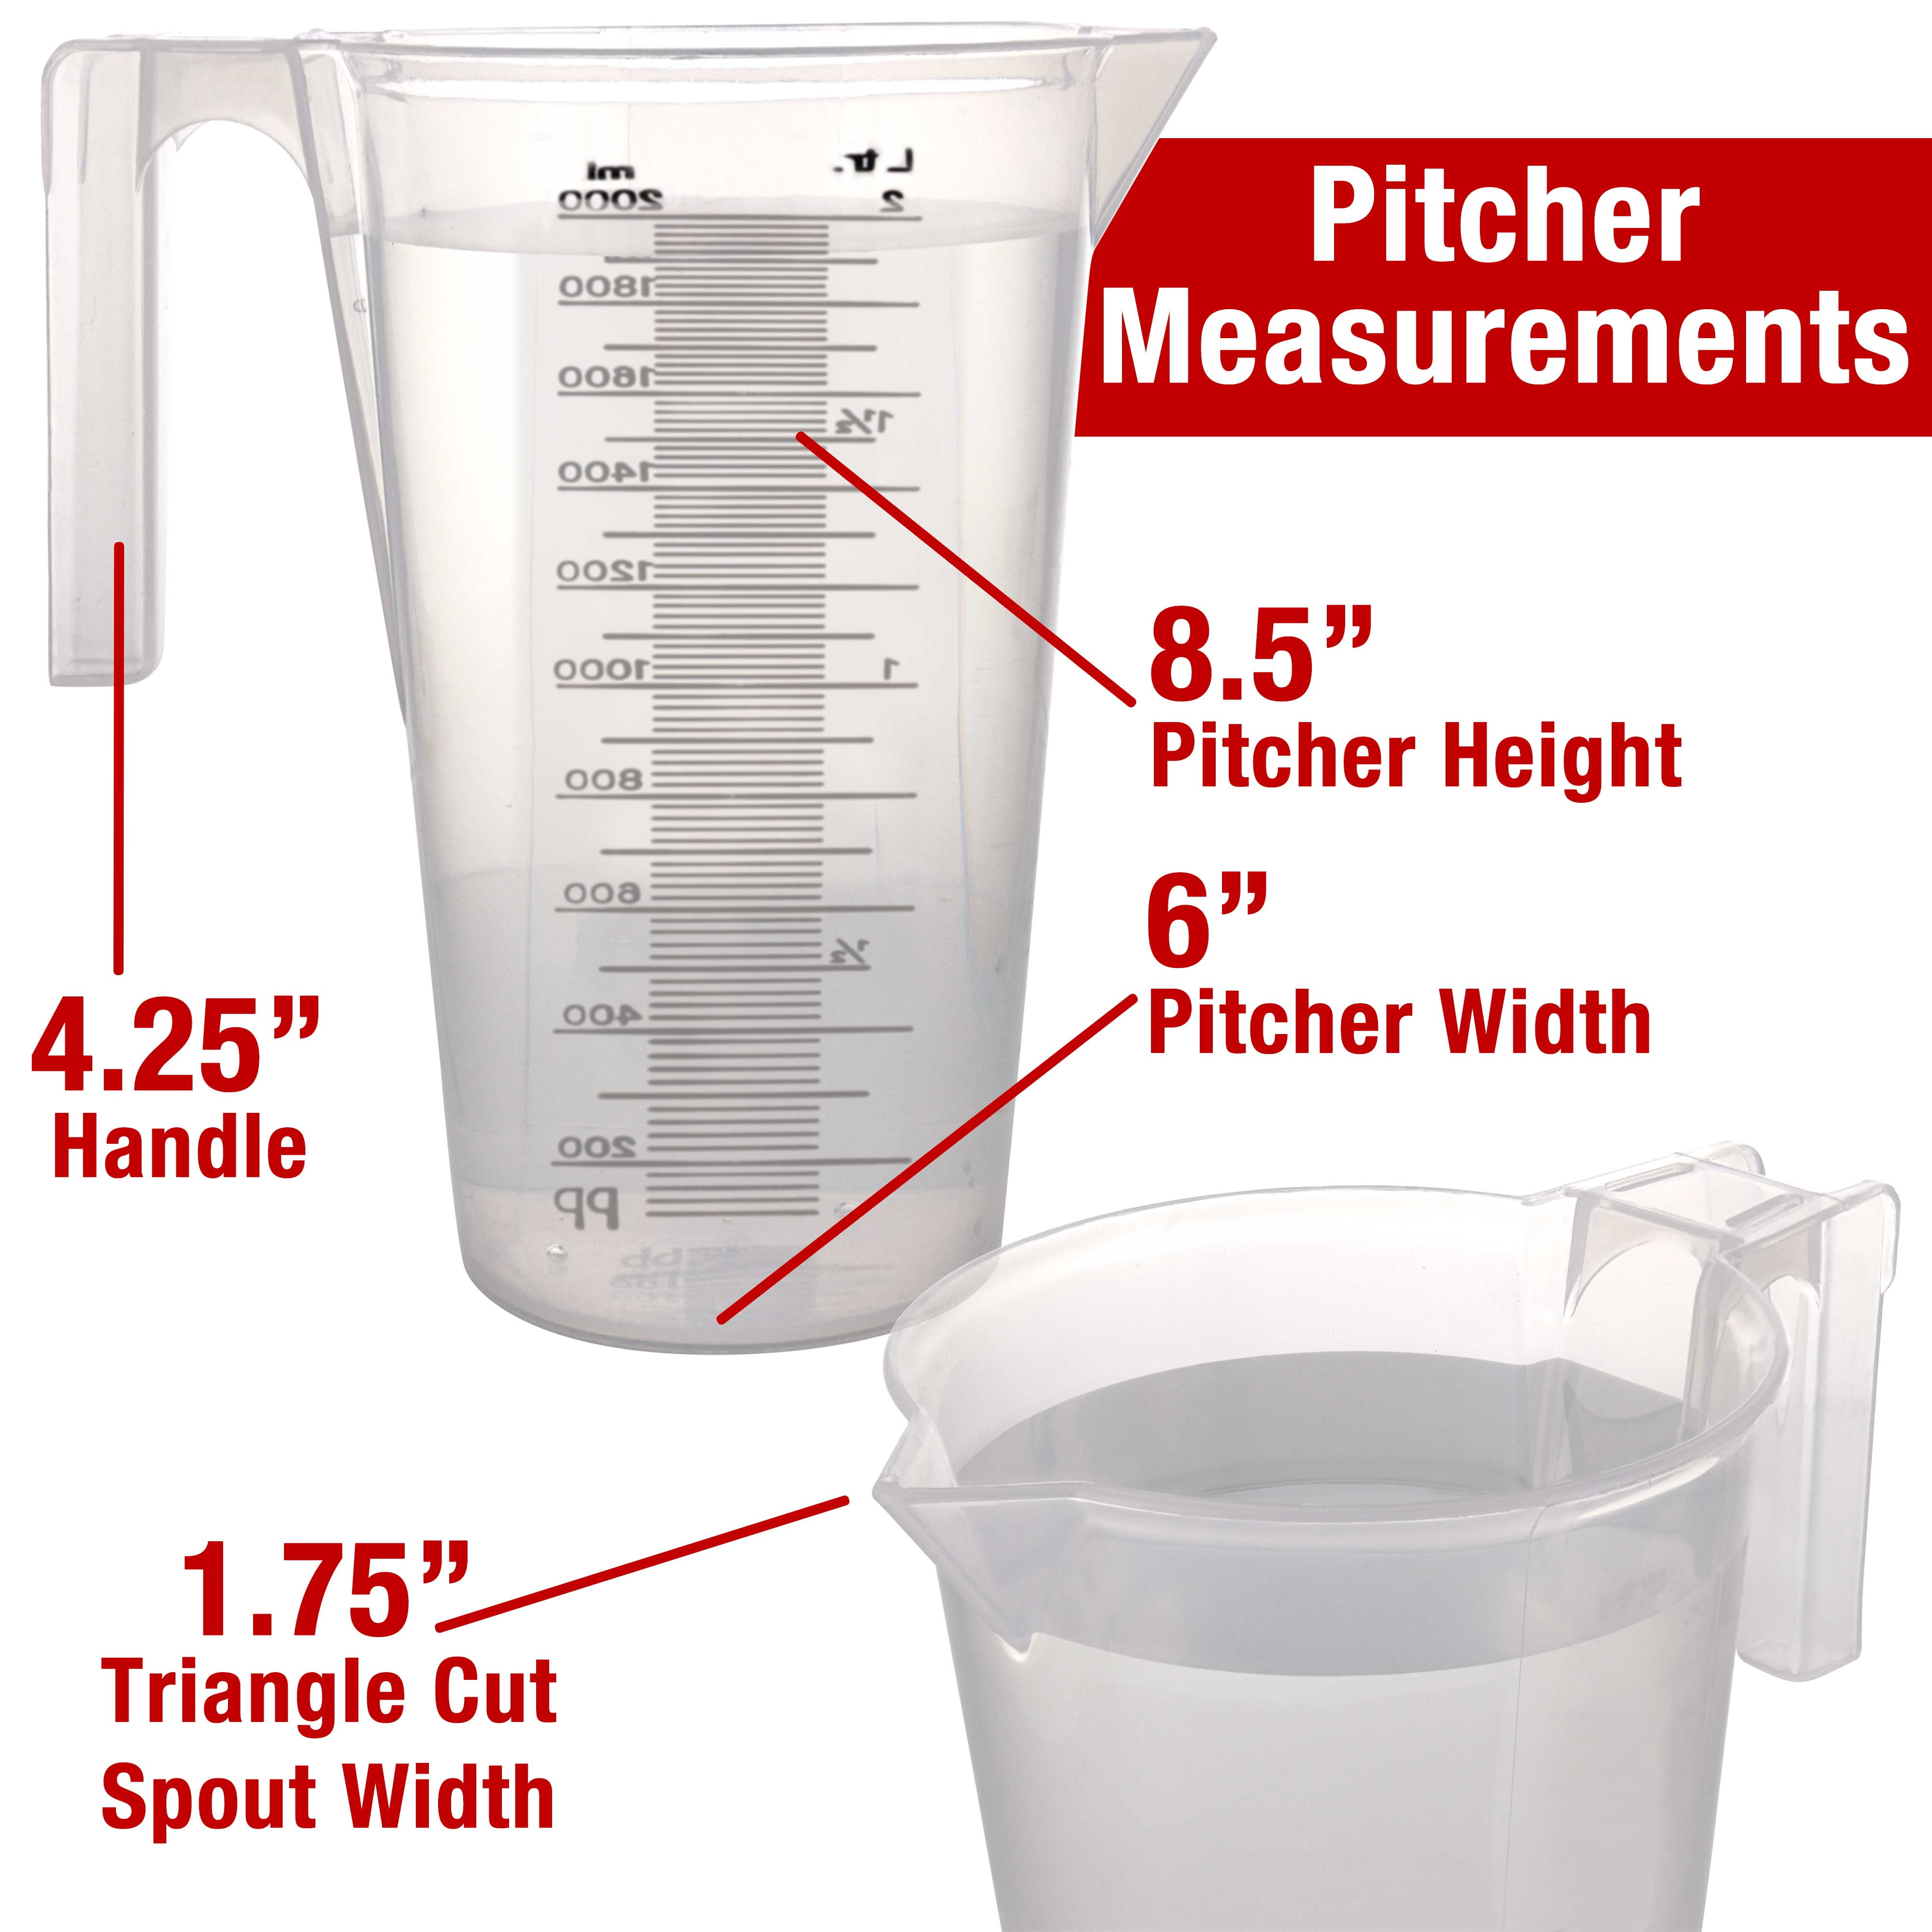 stitch with @heatherlrex dry vs liquid measuring cups are both volume